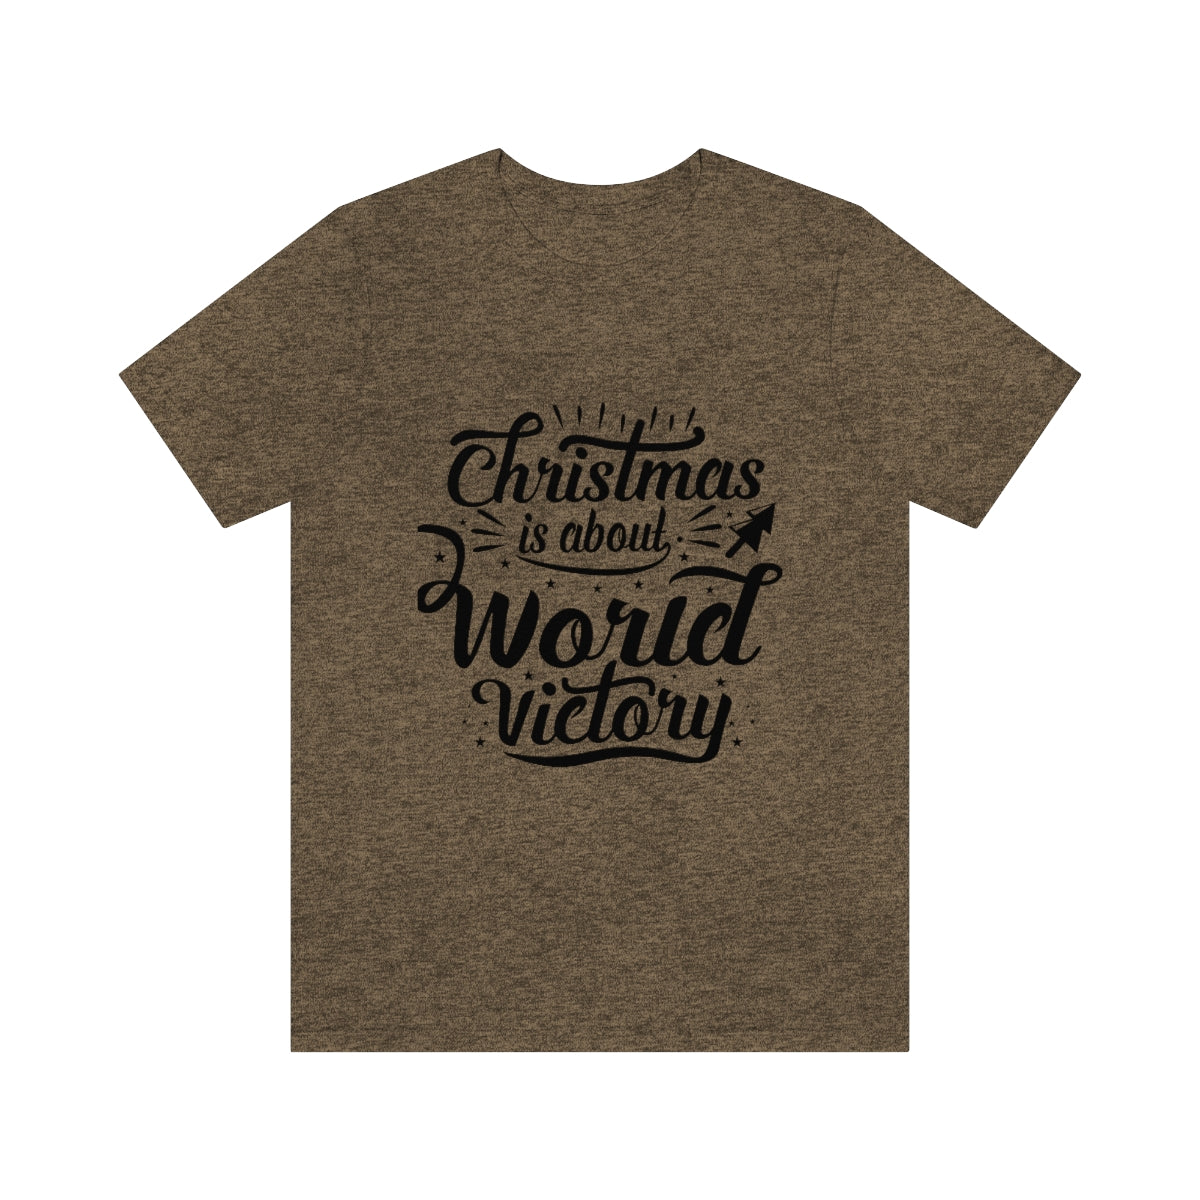 World victory Christmas Tee, Christmas T-shirt, Merry Christmas T-shirt, Unisex T-shirts, Unisex jersey short sleeve tee